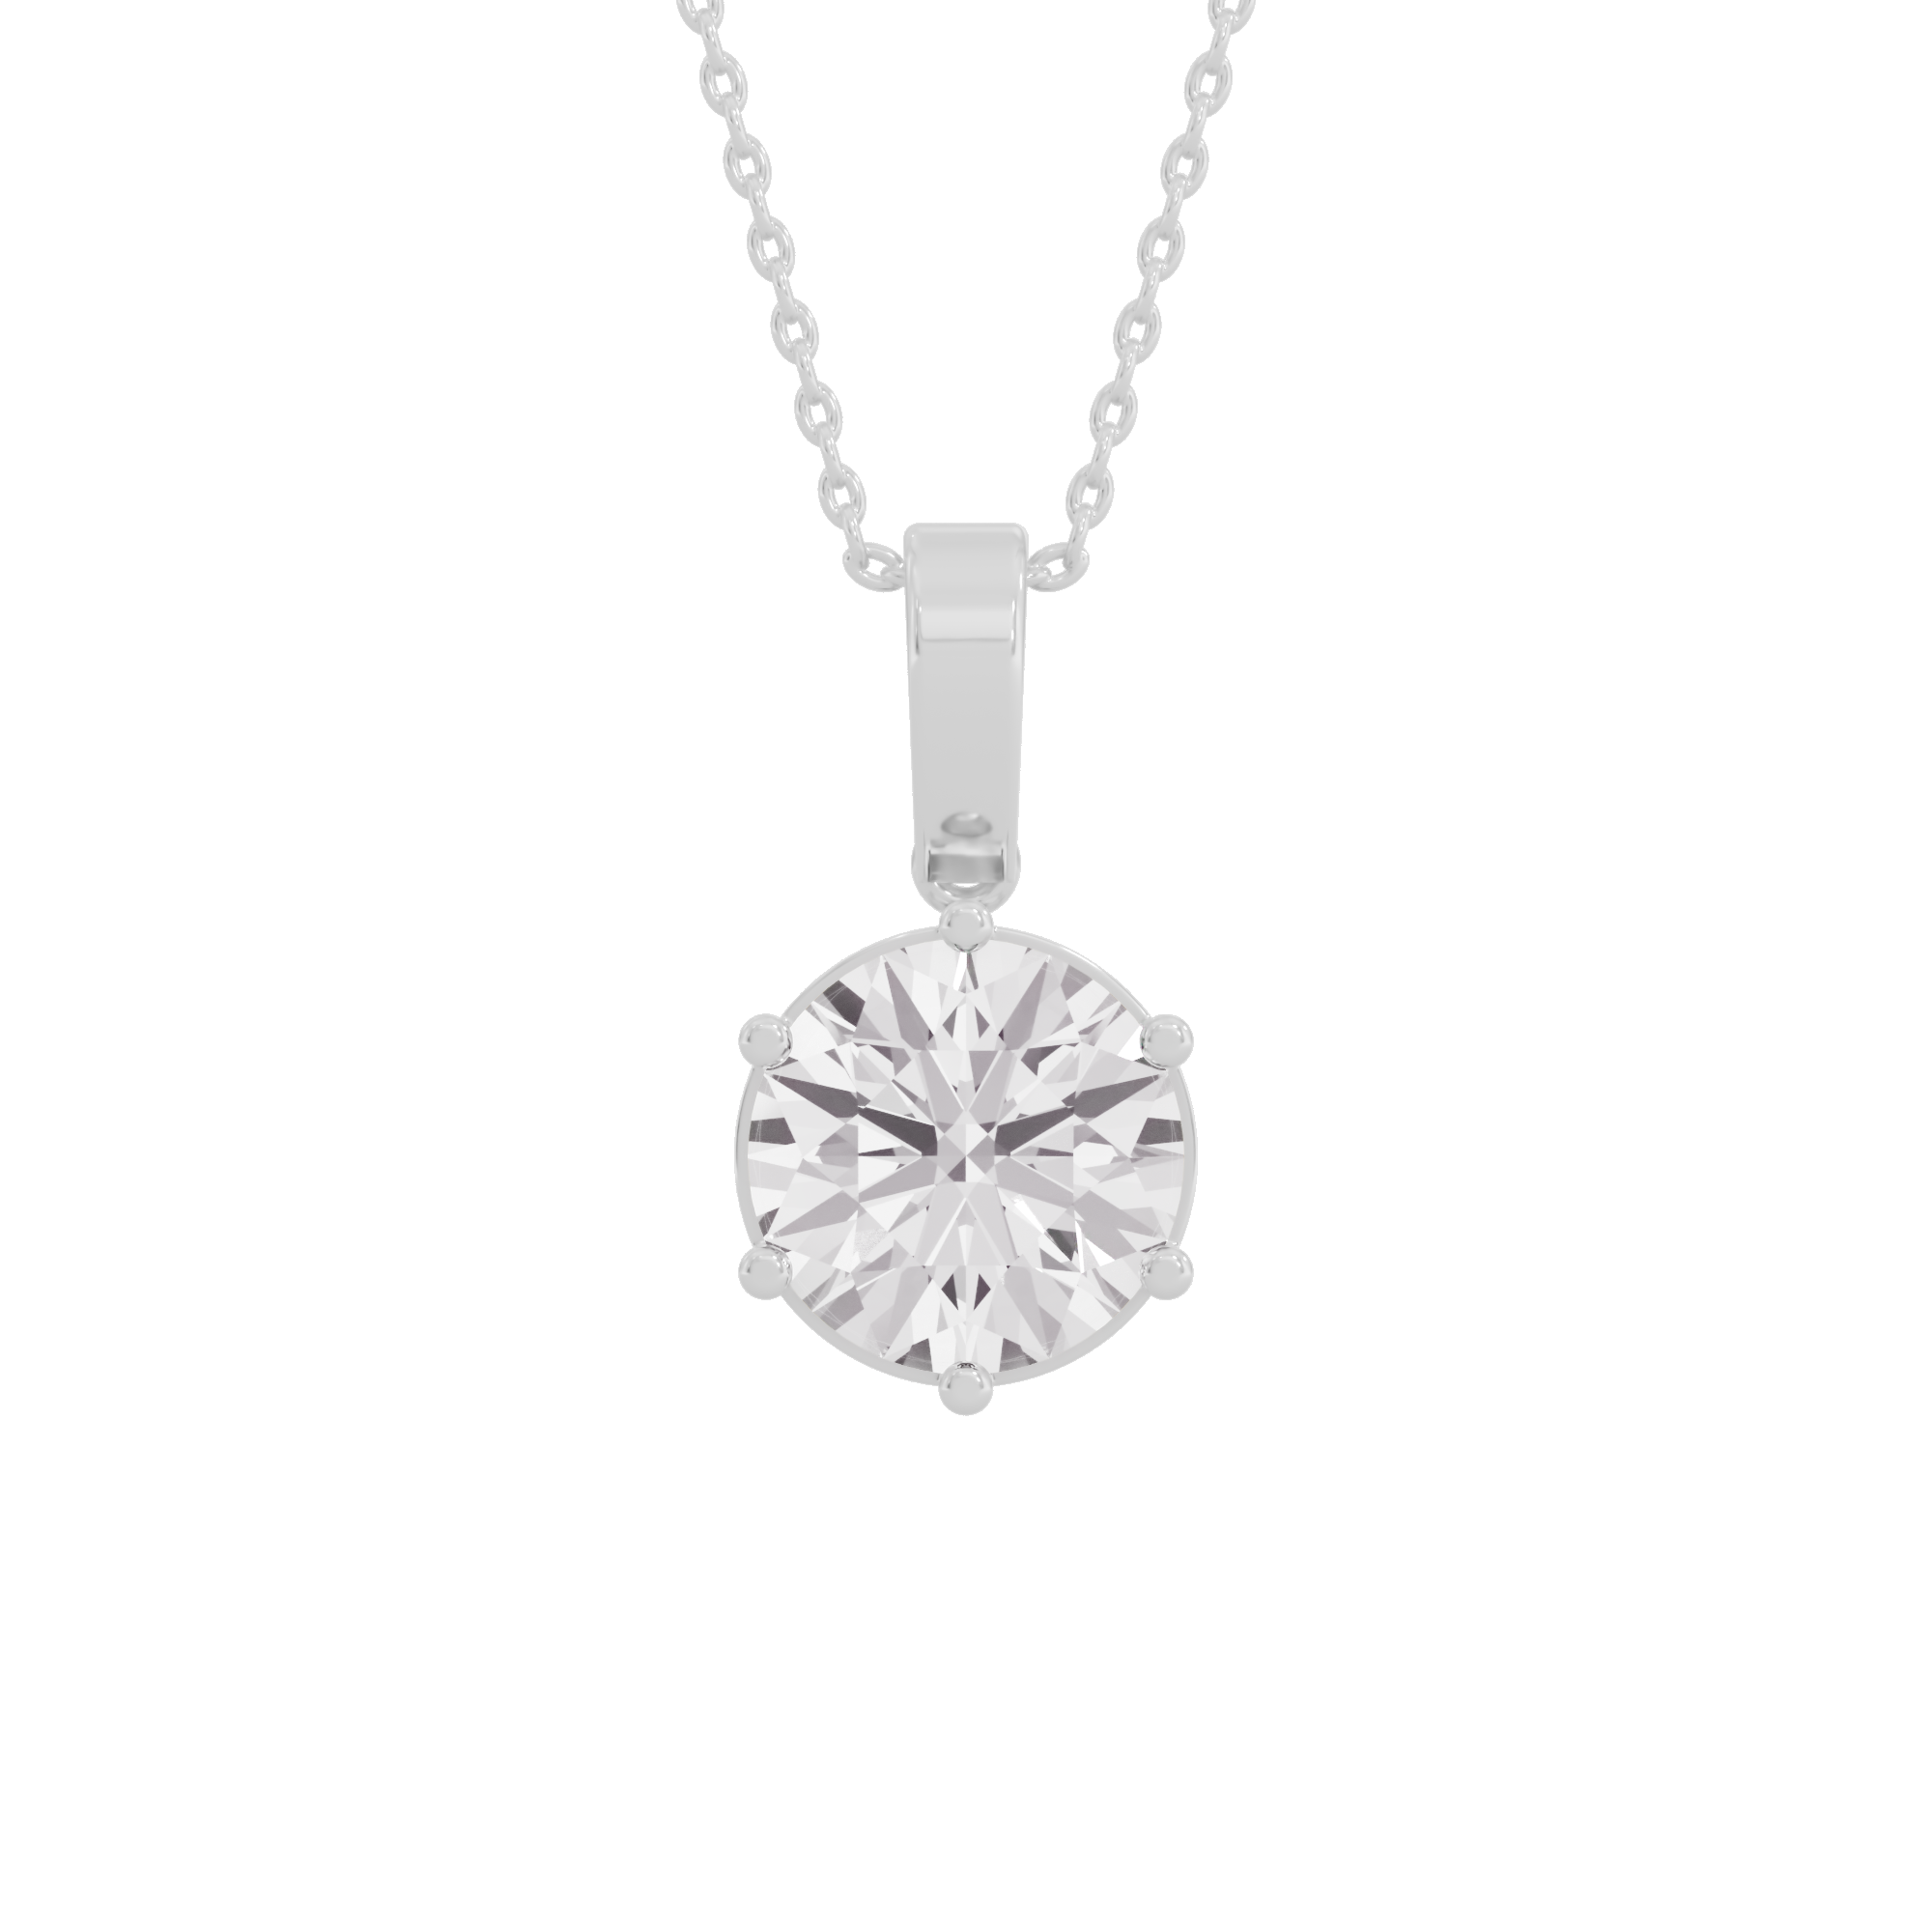 Celestial Charisma Diamond Pendant